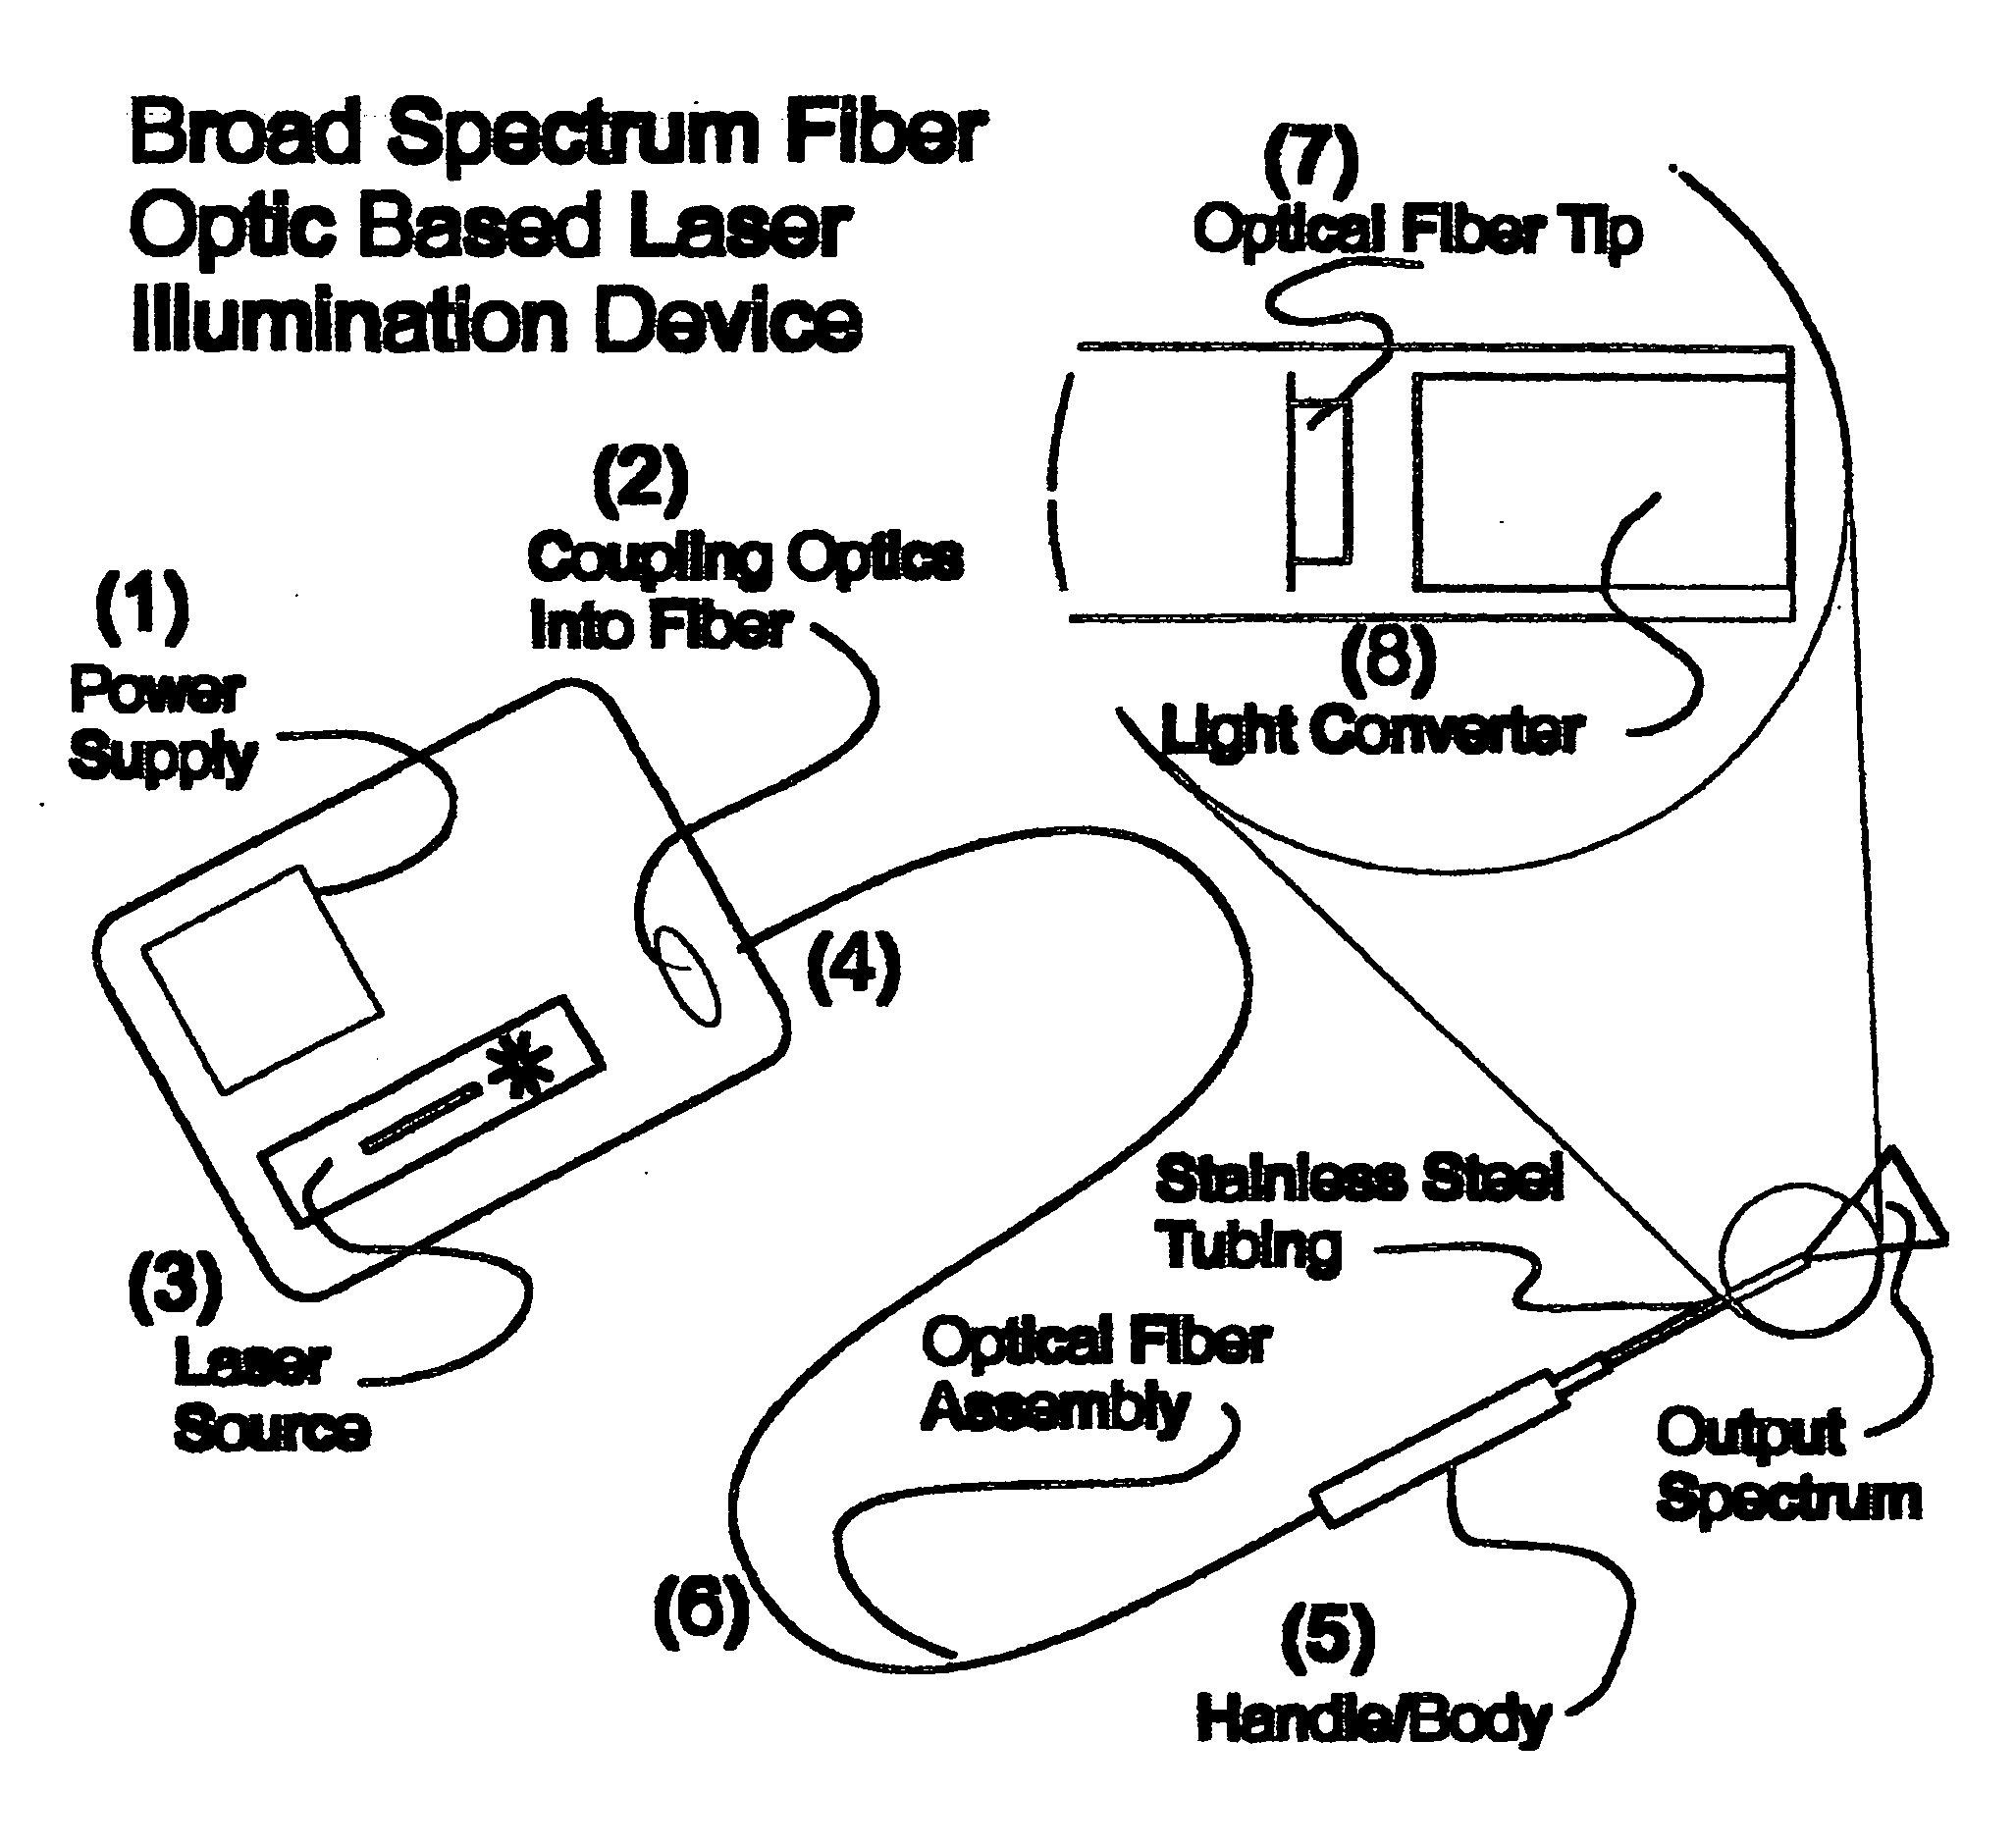 Broad spectrum fiber optic base laser illumination